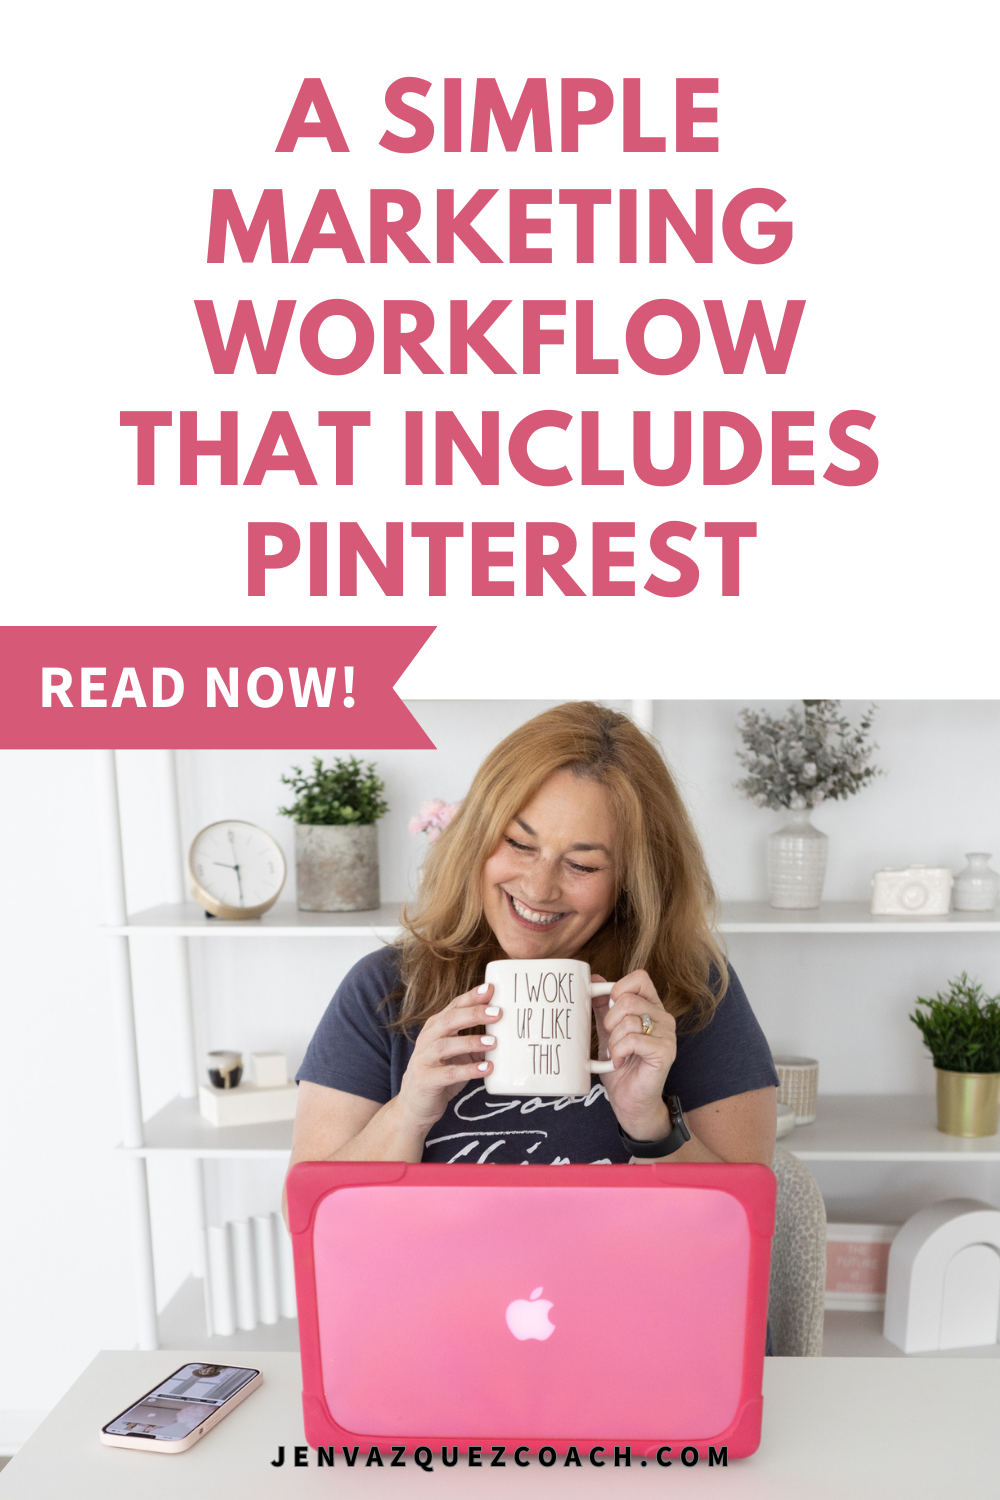 A Super Simple Marketing Workflow that Includes Pinterest by Jen Vazquez Media